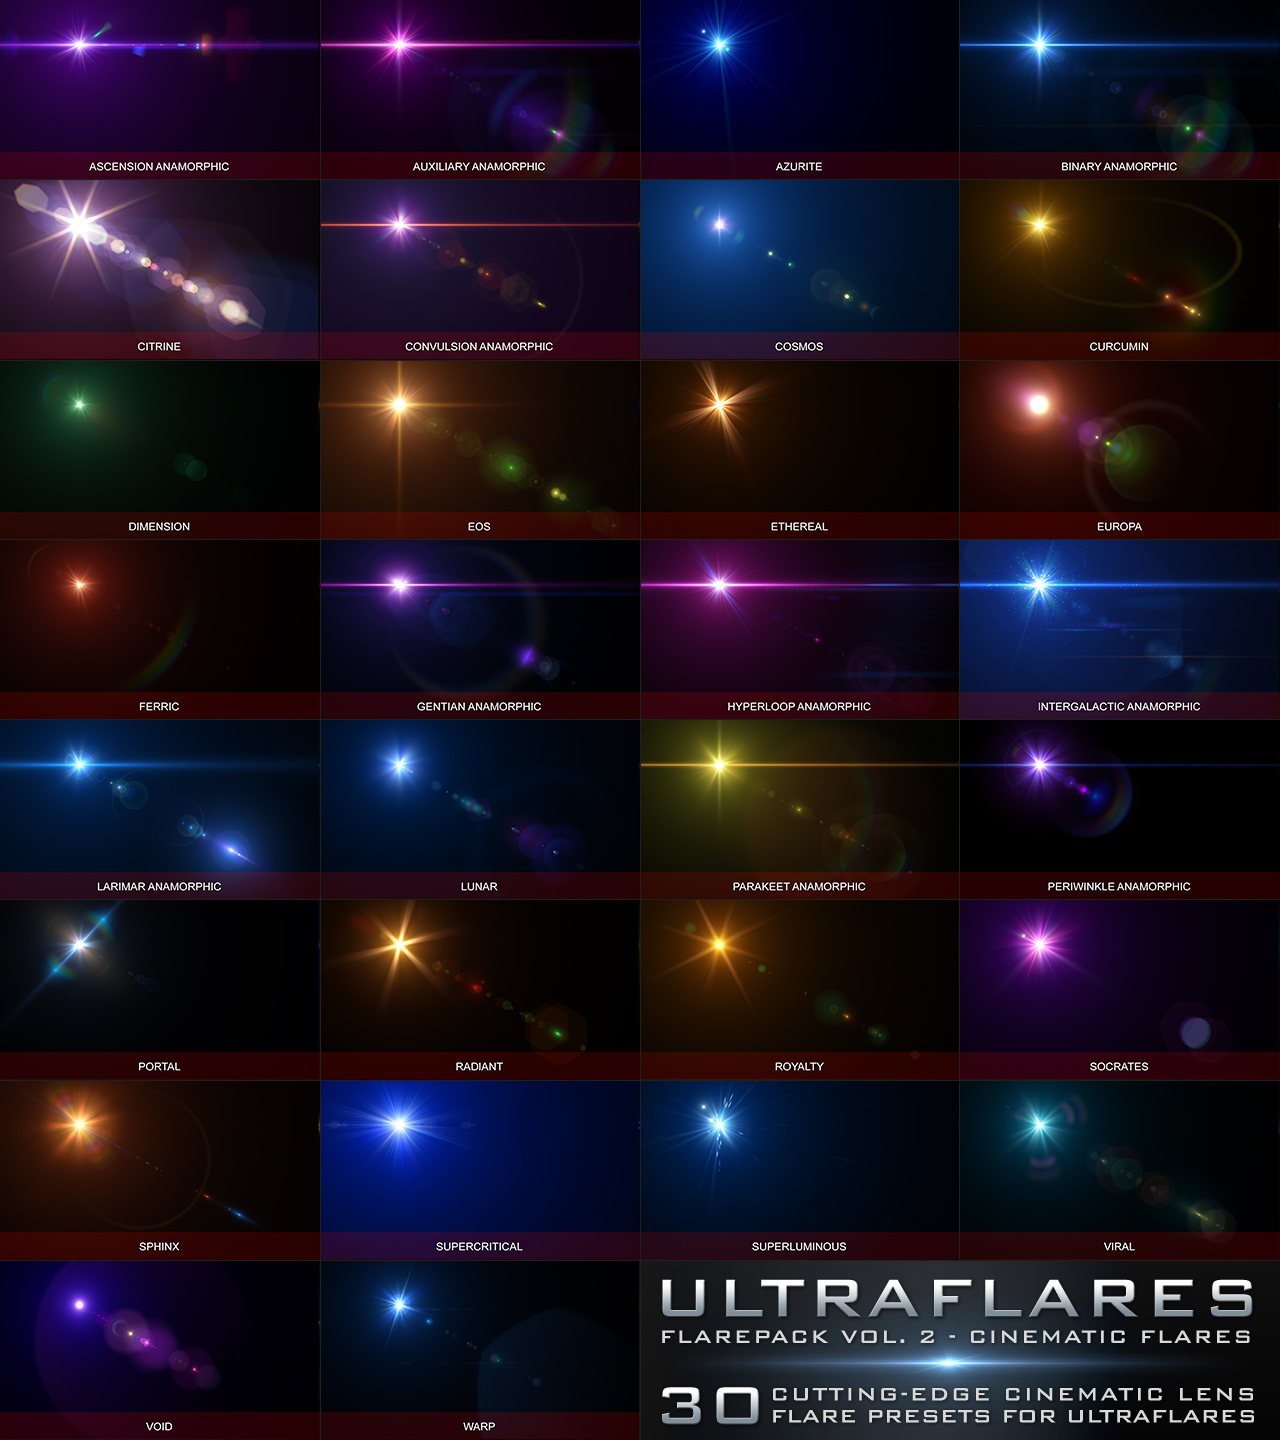 blog_ultraflares_flarepack_vol2_press